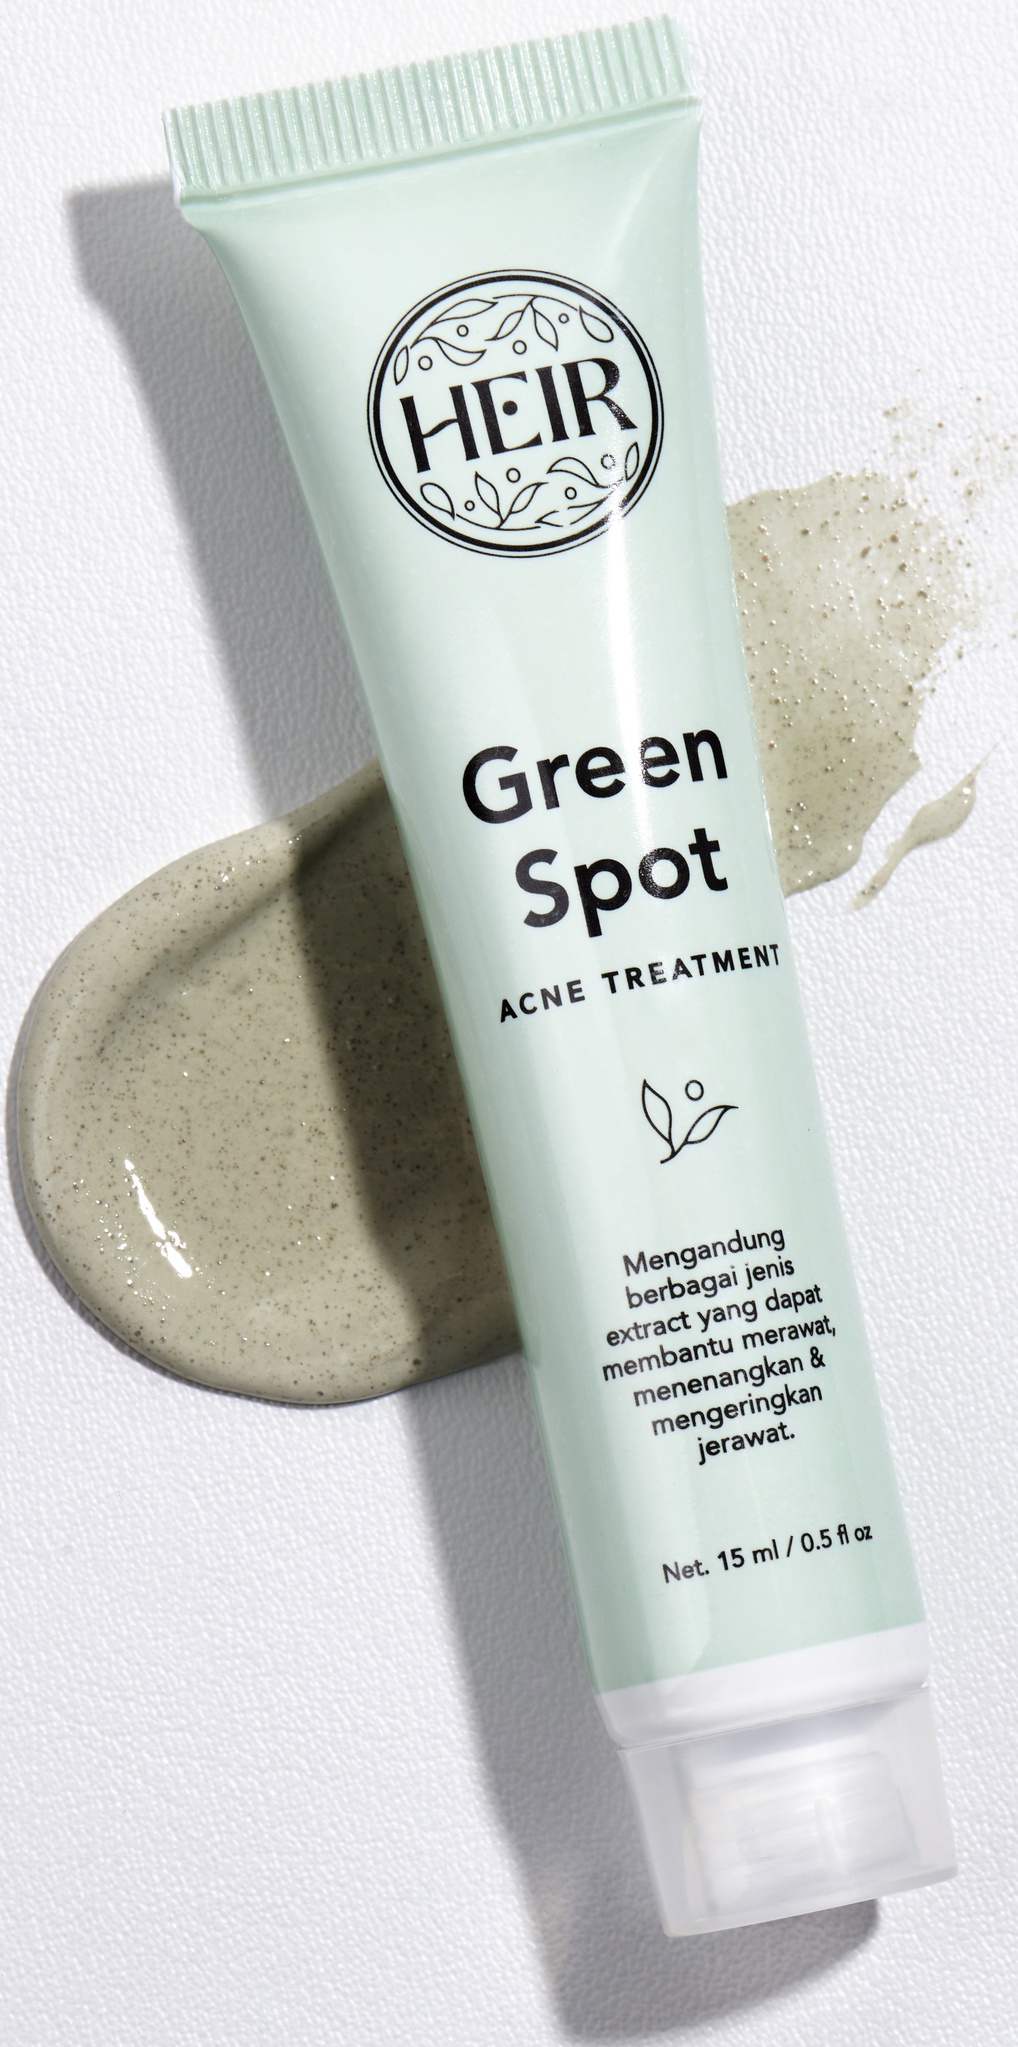 HEIR Green Spot Acne Treatment